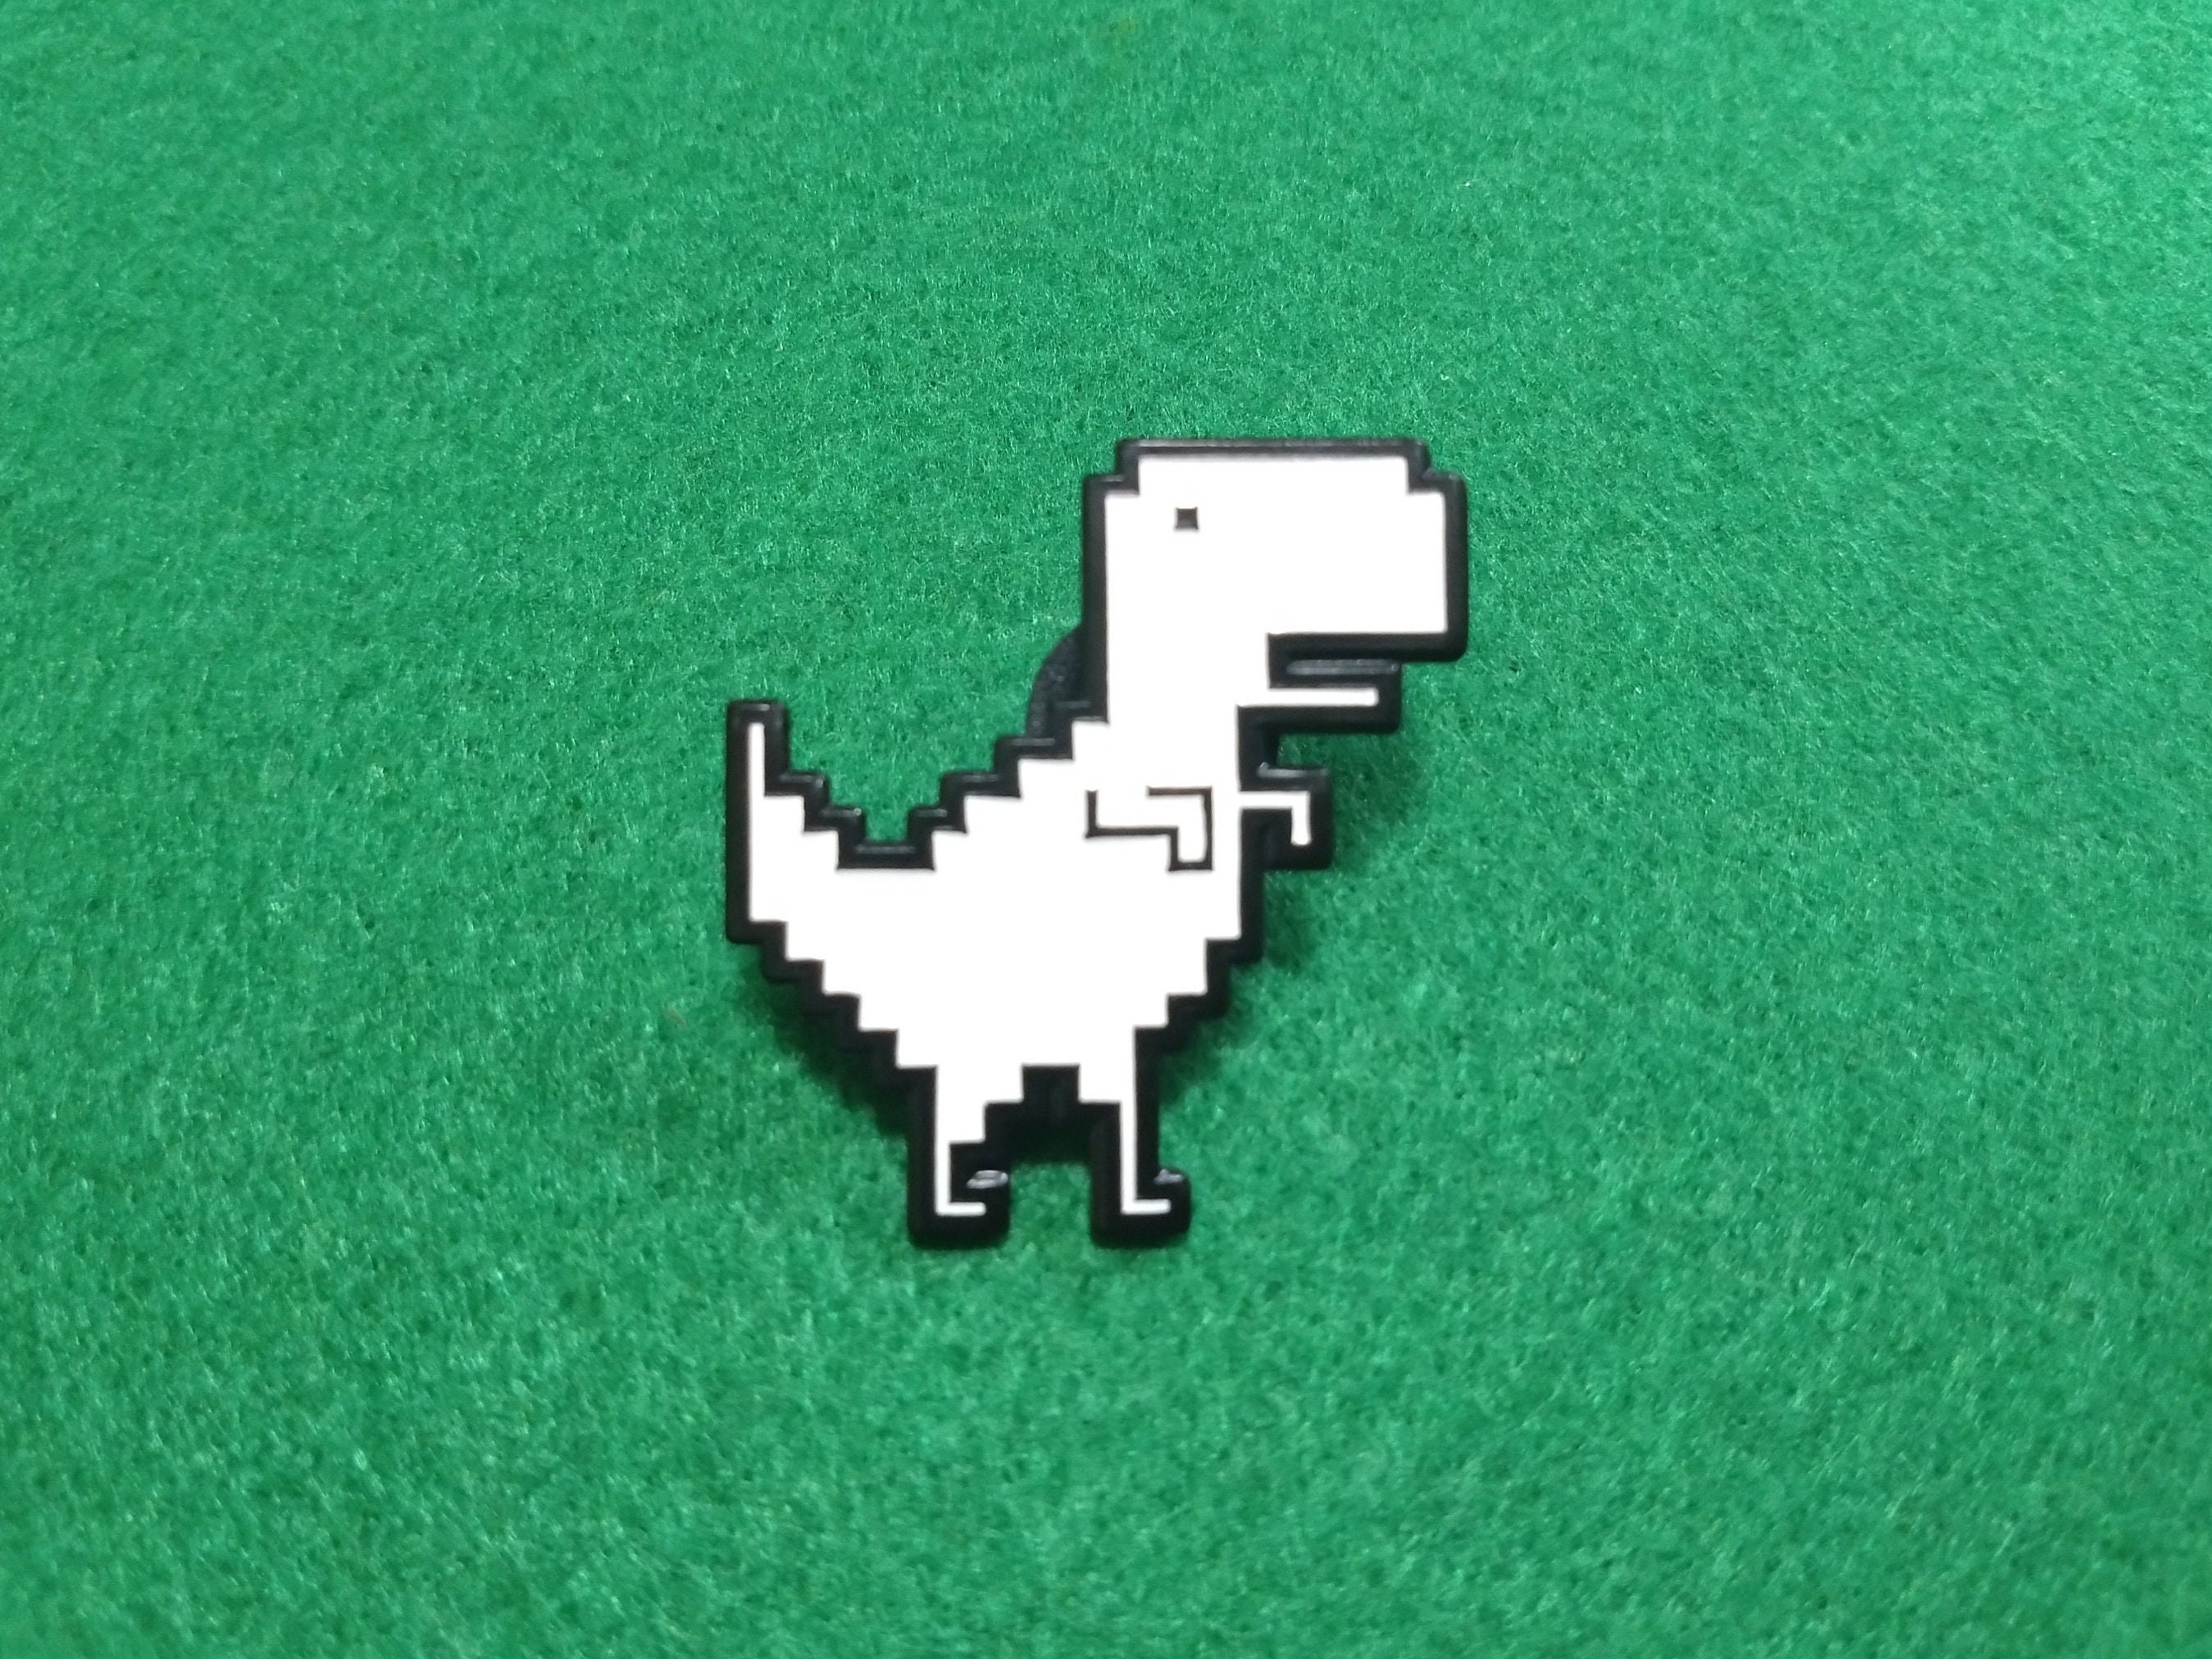 Chrome Dino, The Dinosaur Game, T-Rex Game Art Print by Zen20